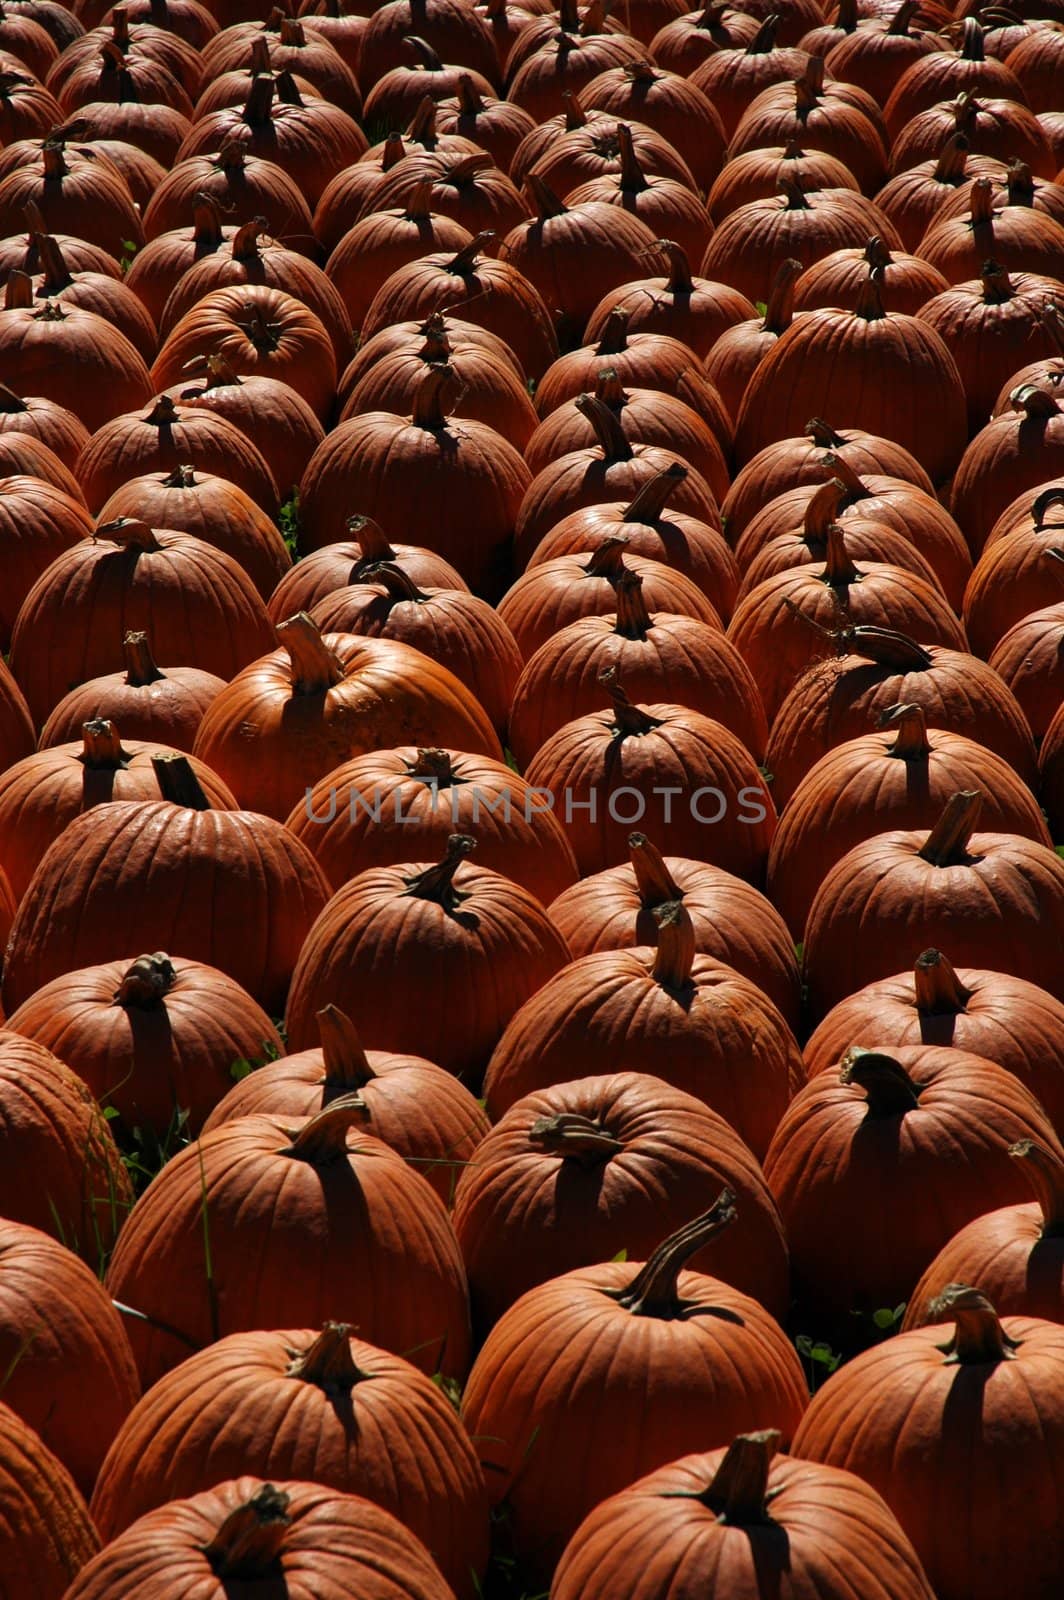 Pumpkin Row by befehr